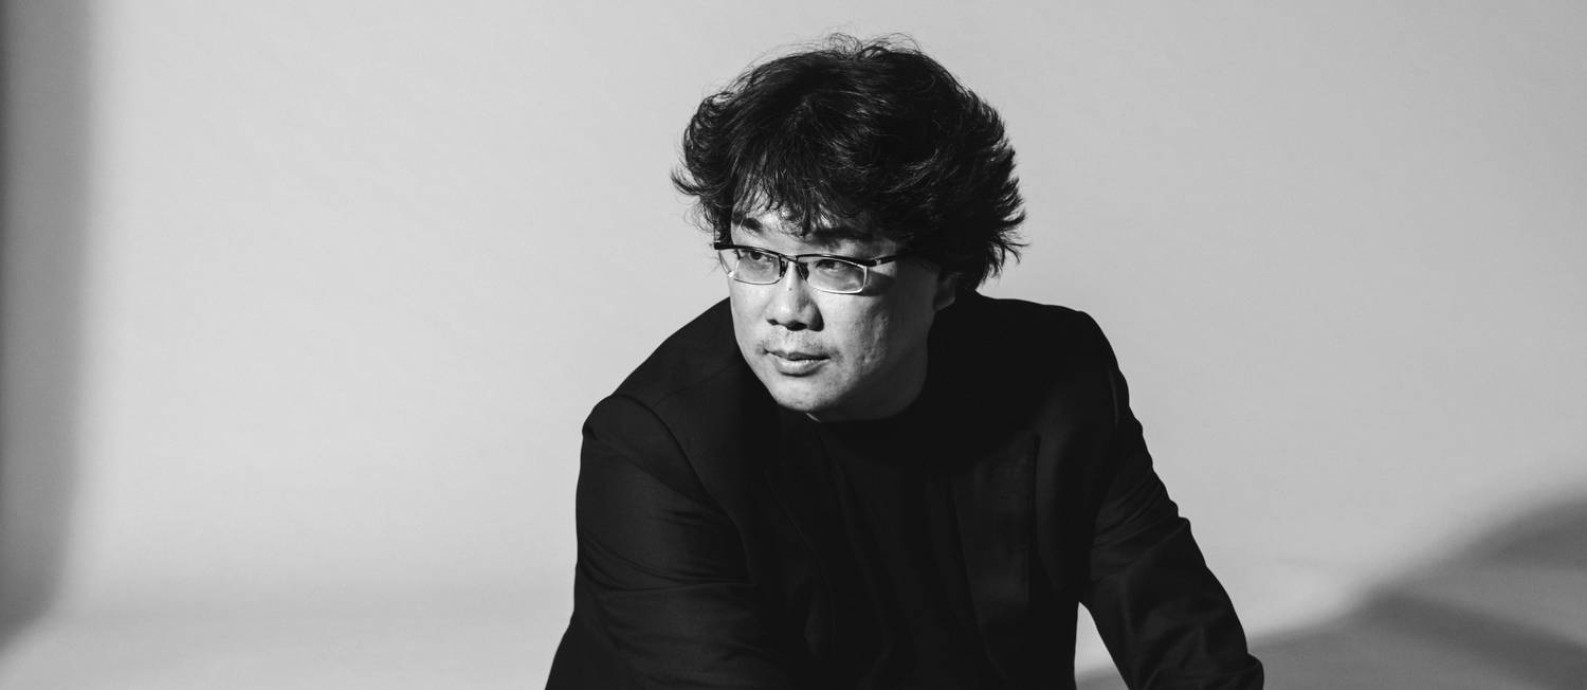 Bong Joon-ho, diretor de Parasita Foto: New York Times/PHILIP CHEUNG / NYT